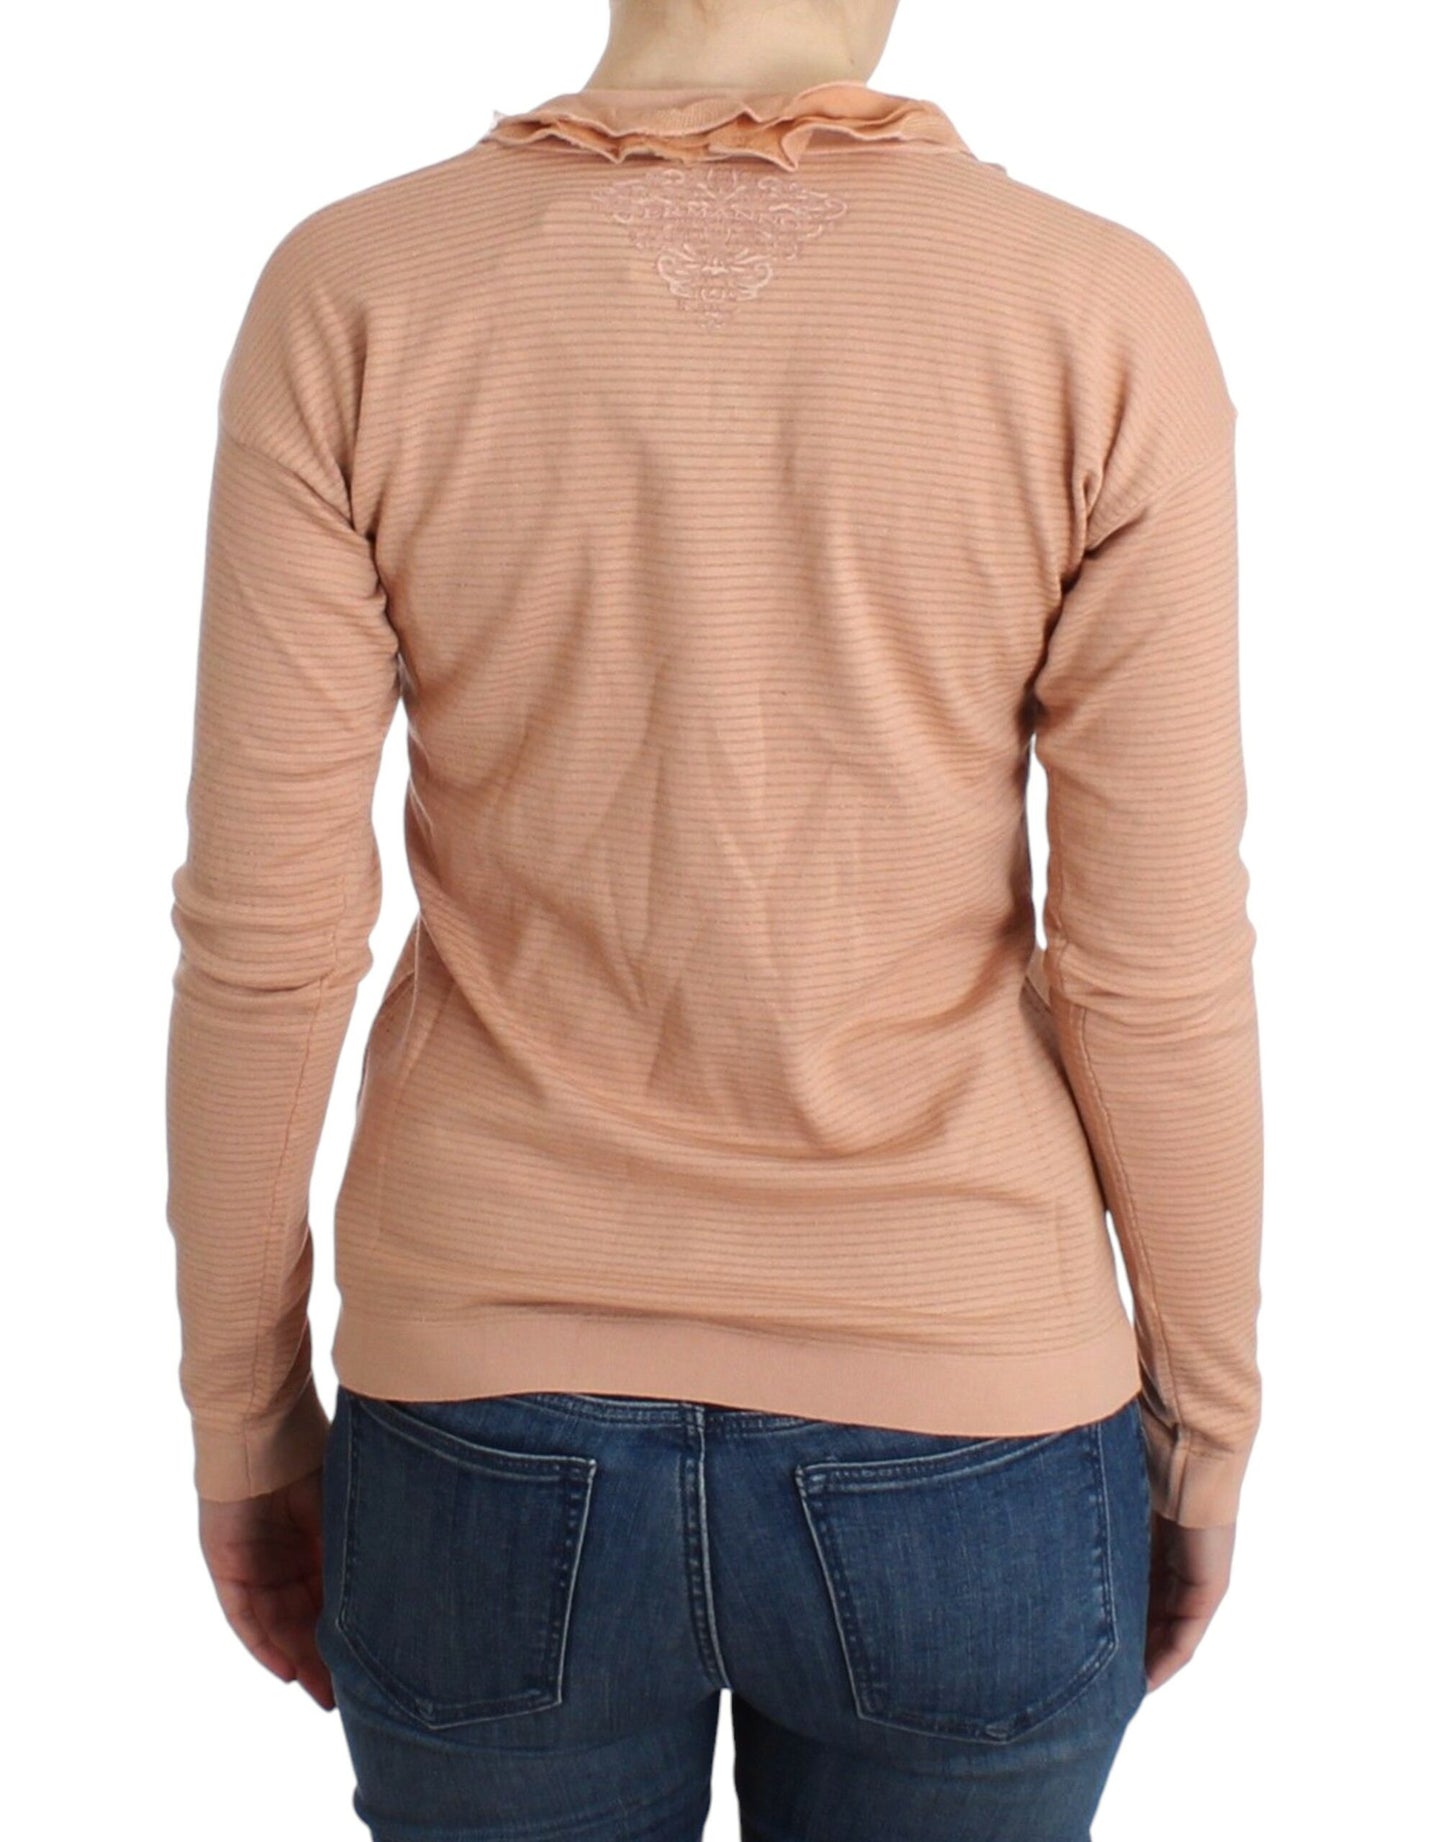 Chic Striped Wool Blend Orange Sweater